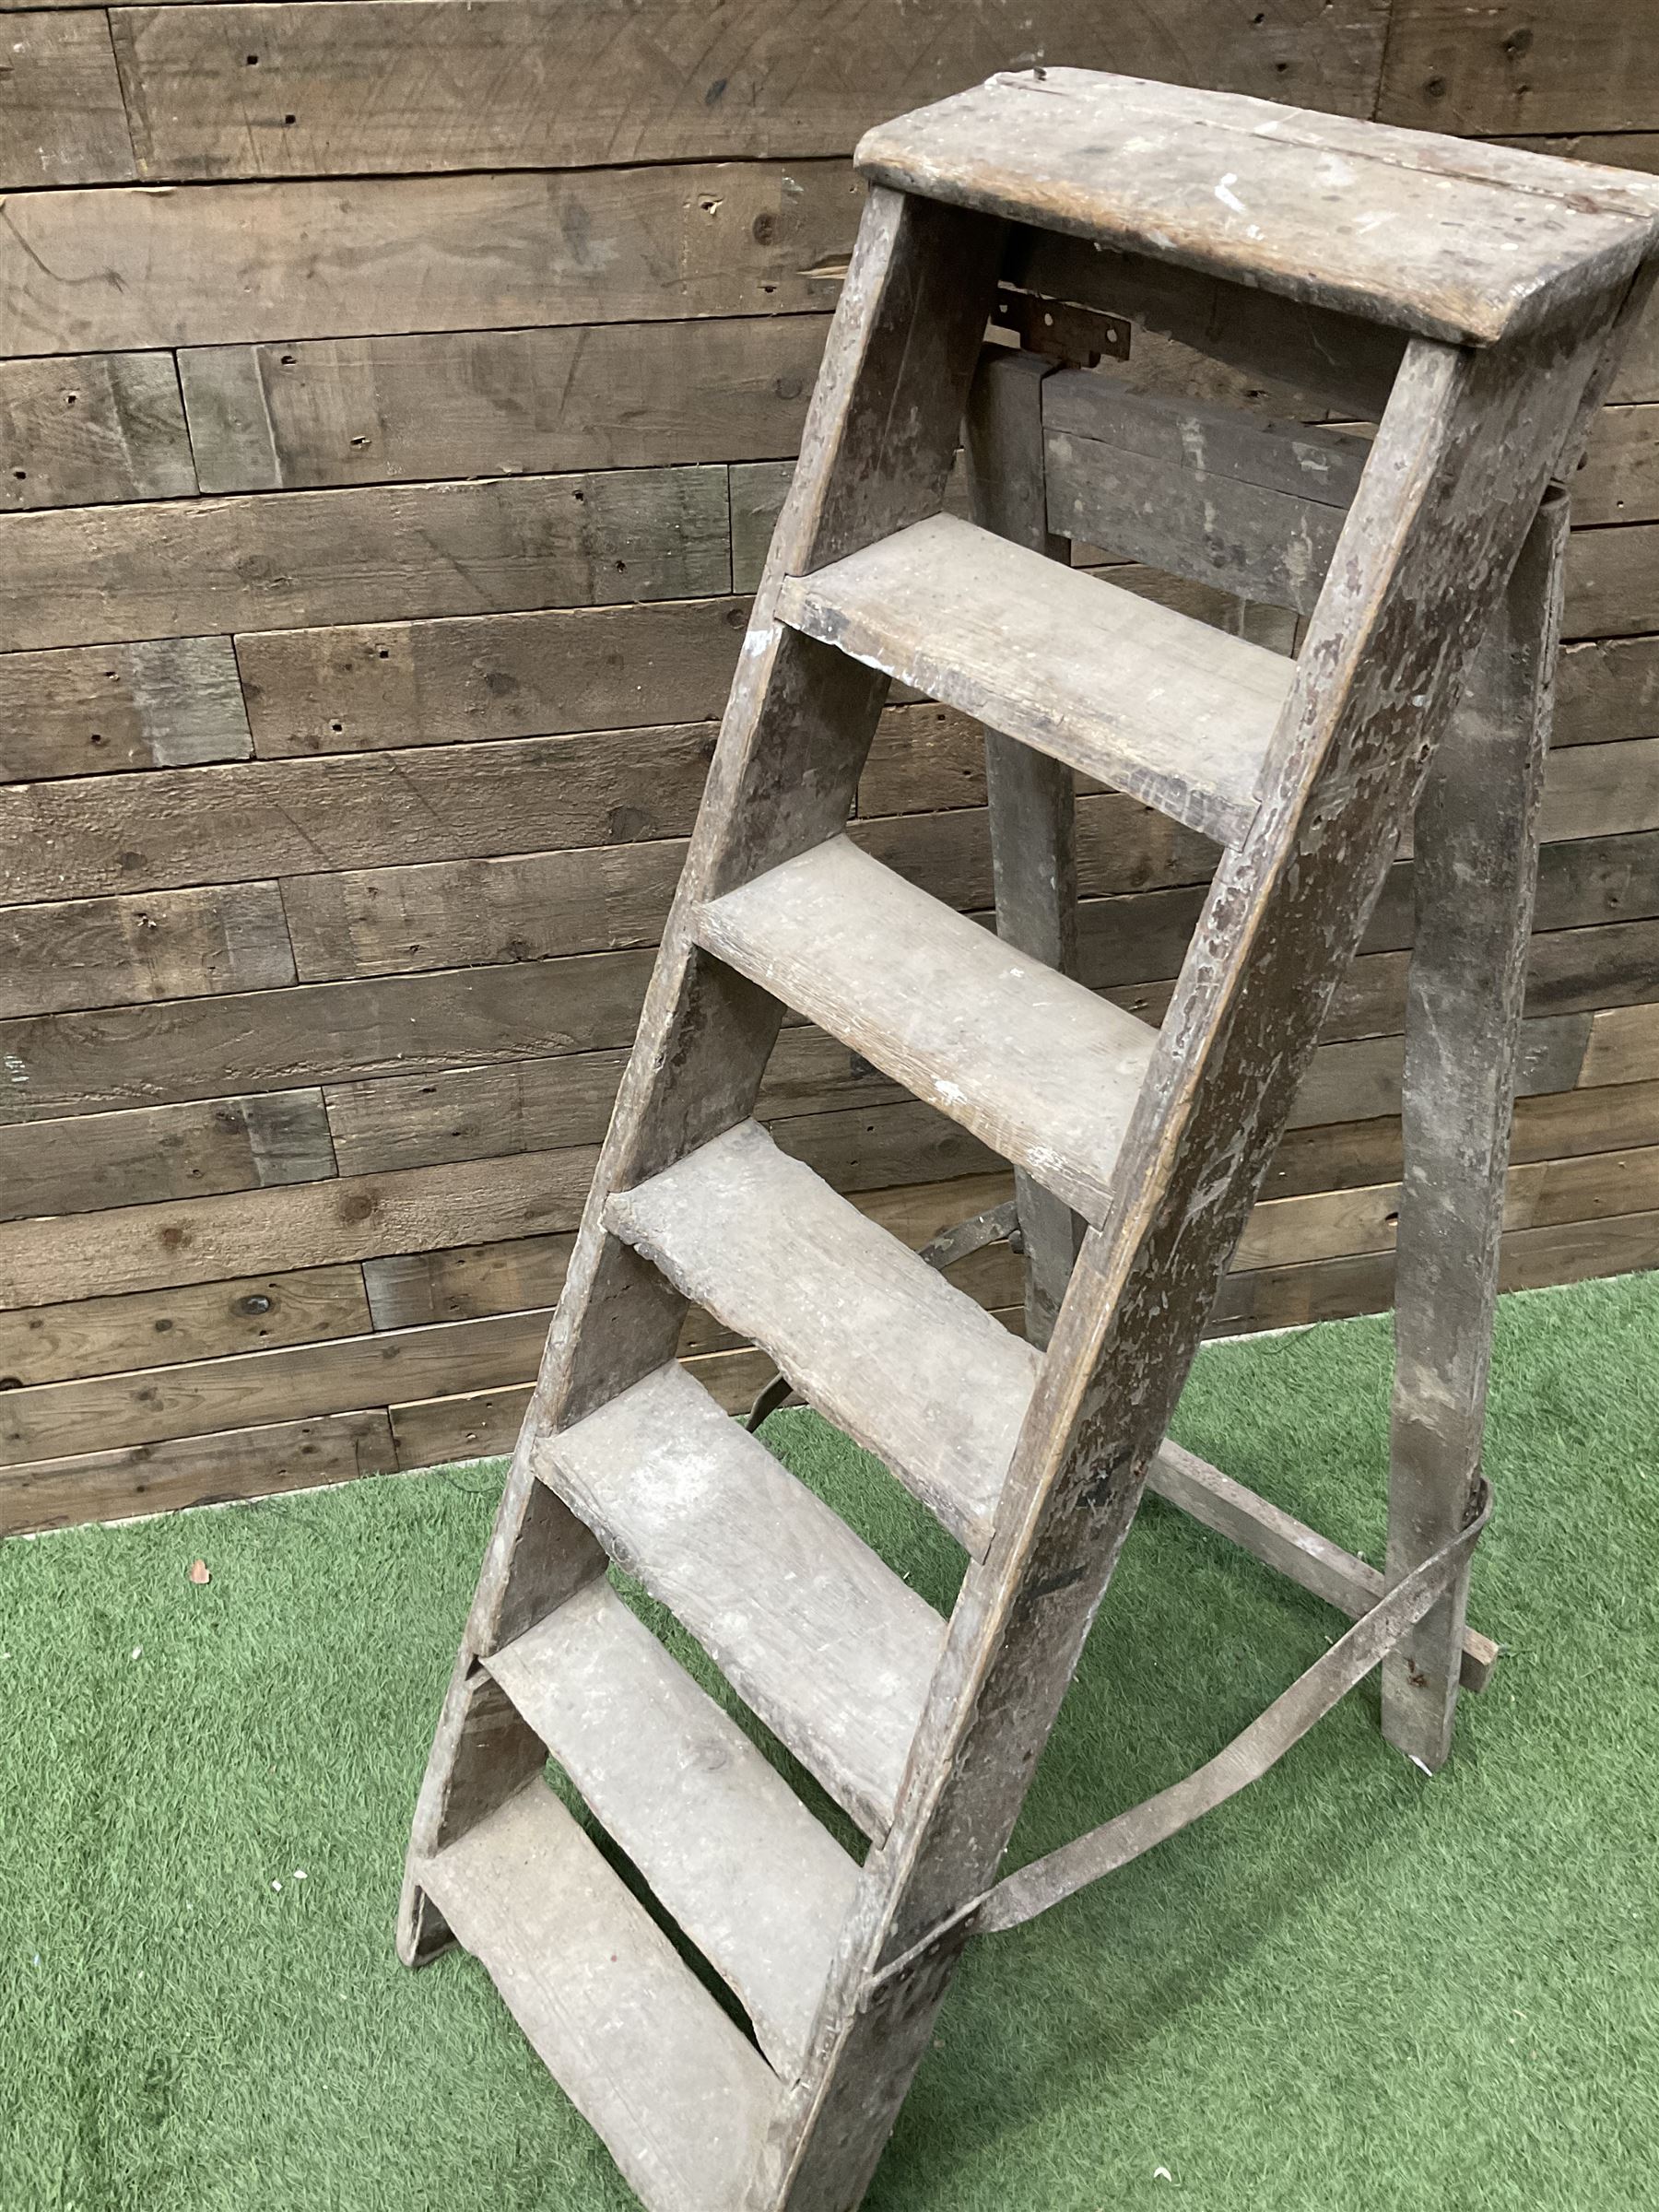 Vintage wooden step ladders - Image 4 of 4